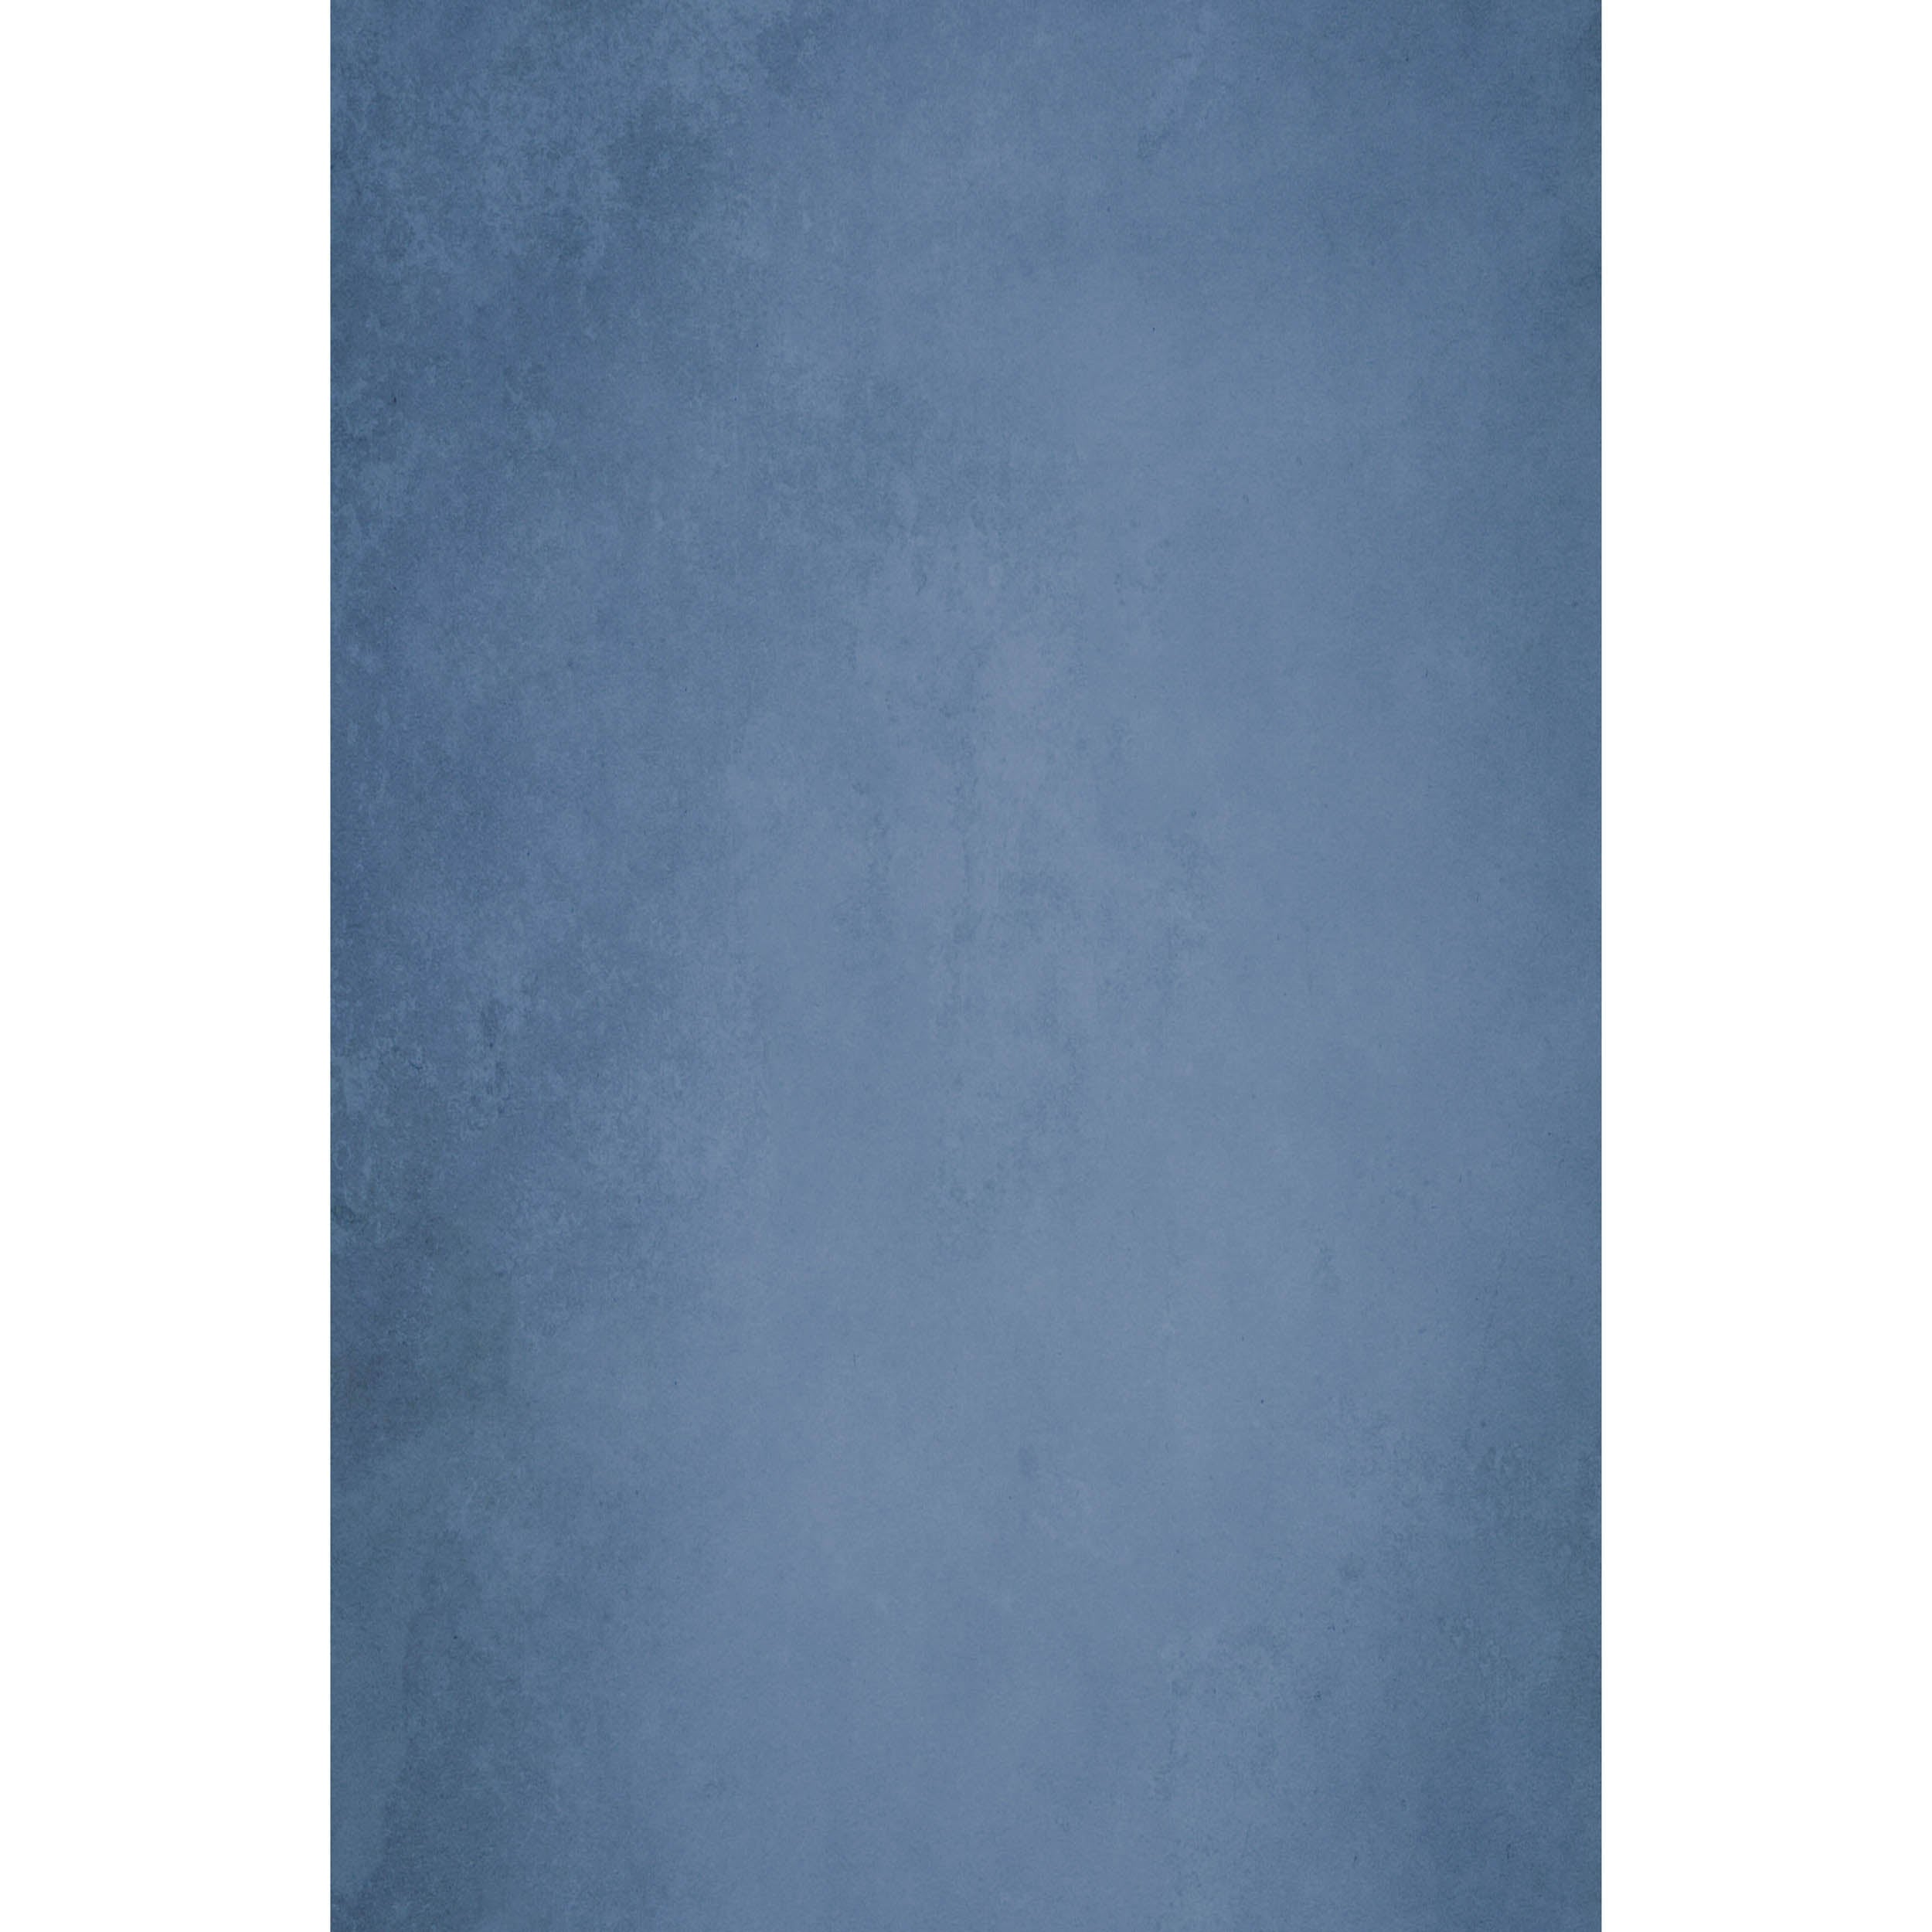 EASIFRAME CURVED C28-Haze Blue Fabric Skin Pattern